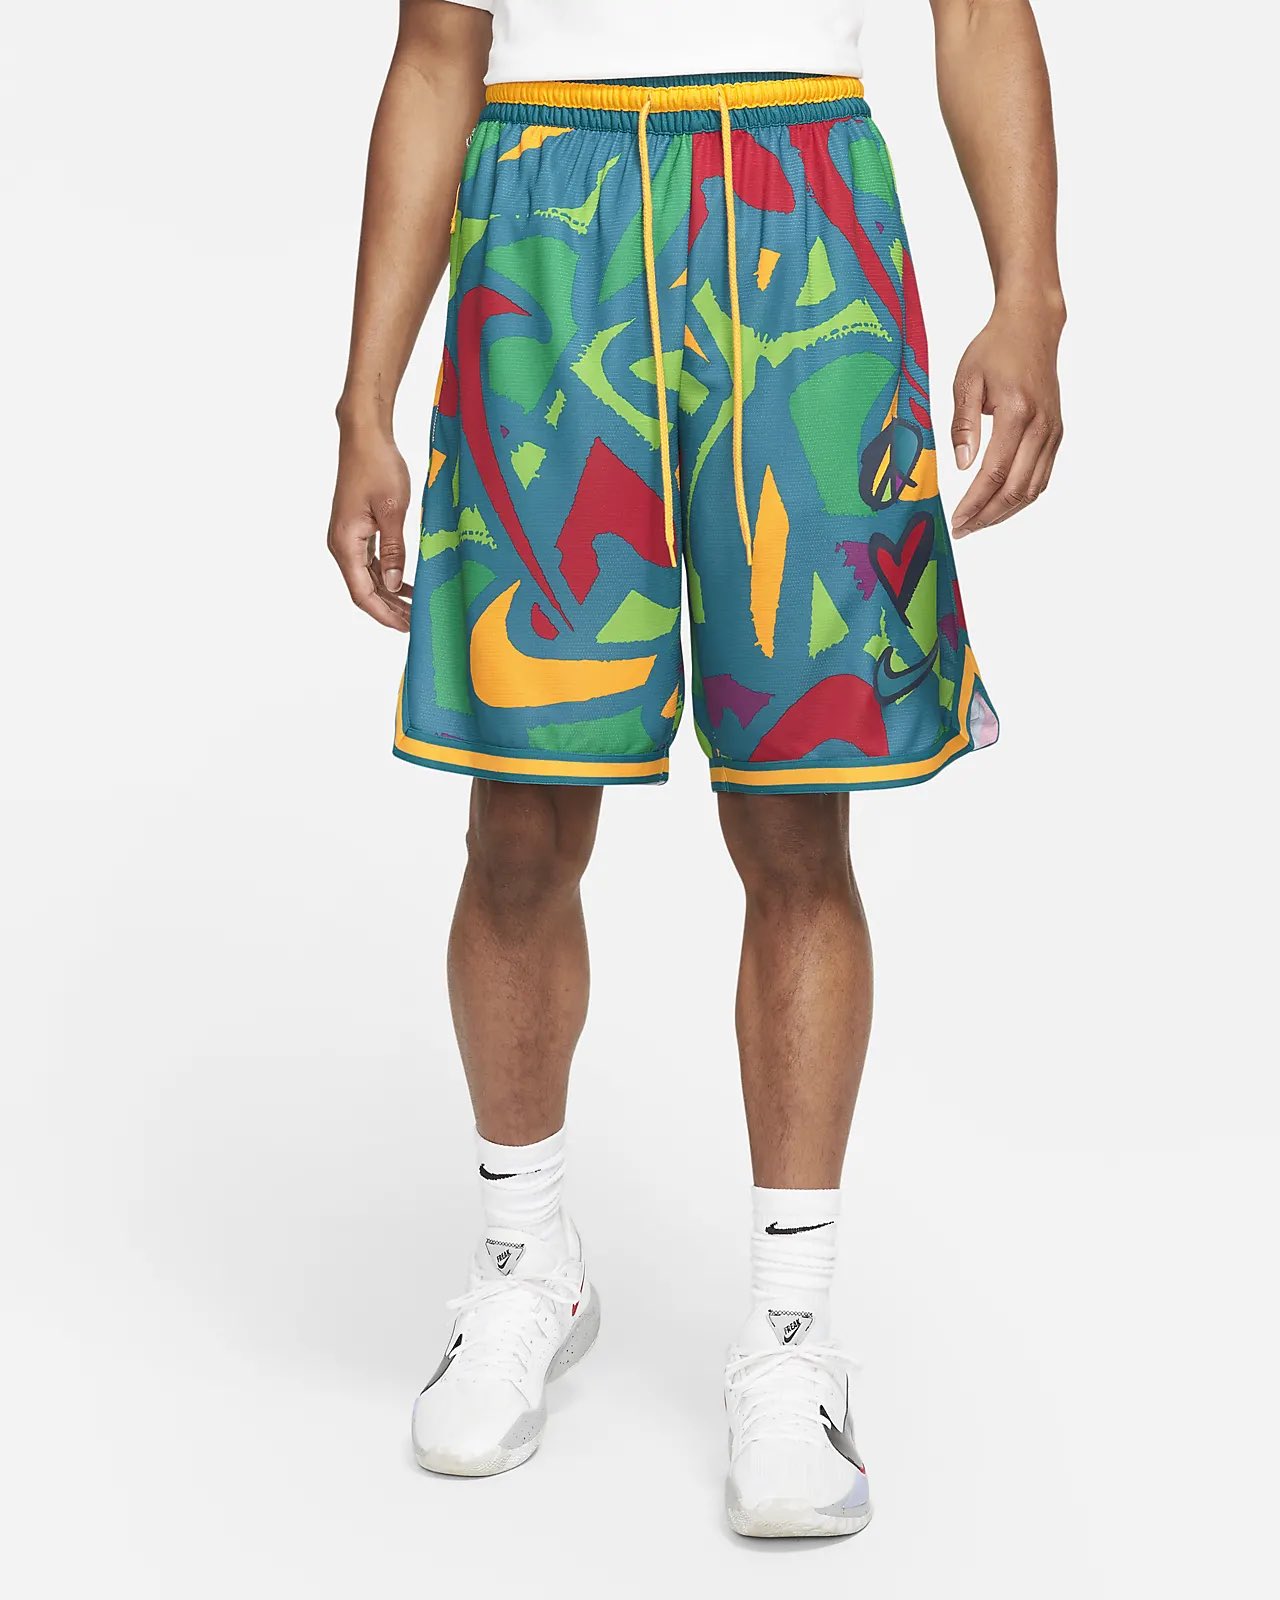 Warriors City Edition Nike NBA Swingman Shorts.